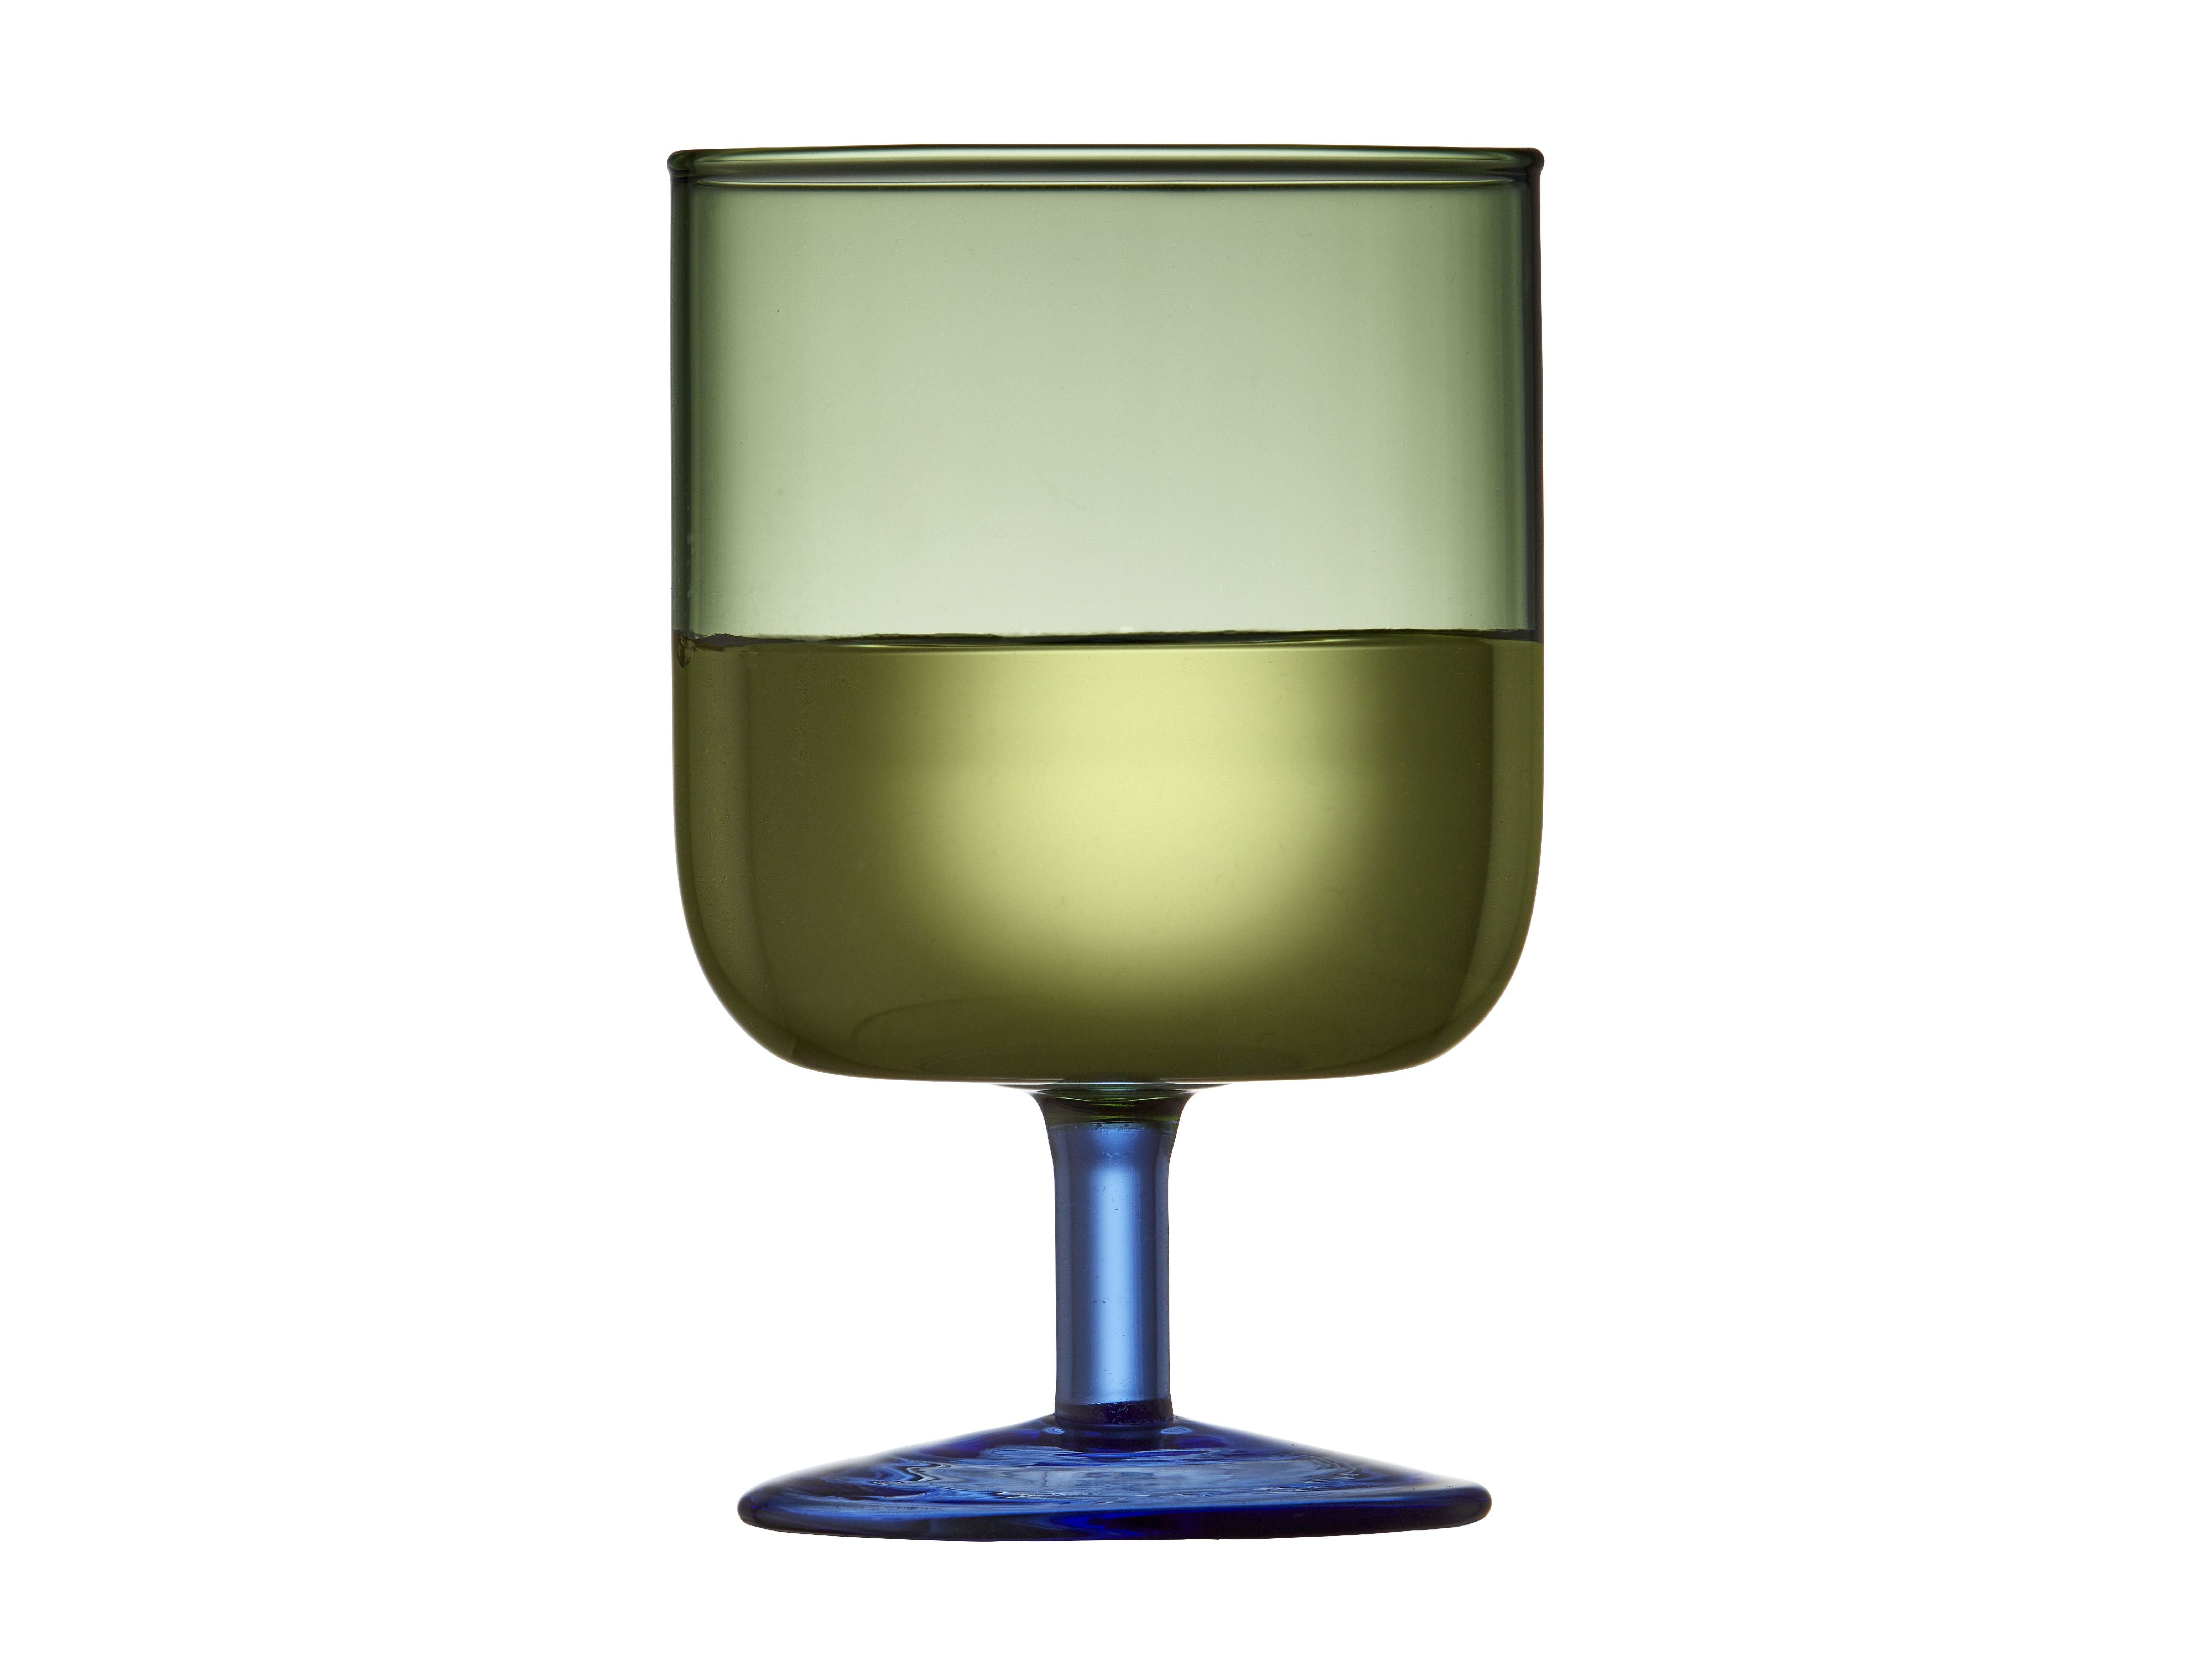 Lyngby Glas Torino Wine Glass 30 Cl 2 Pcs, Green/Blue